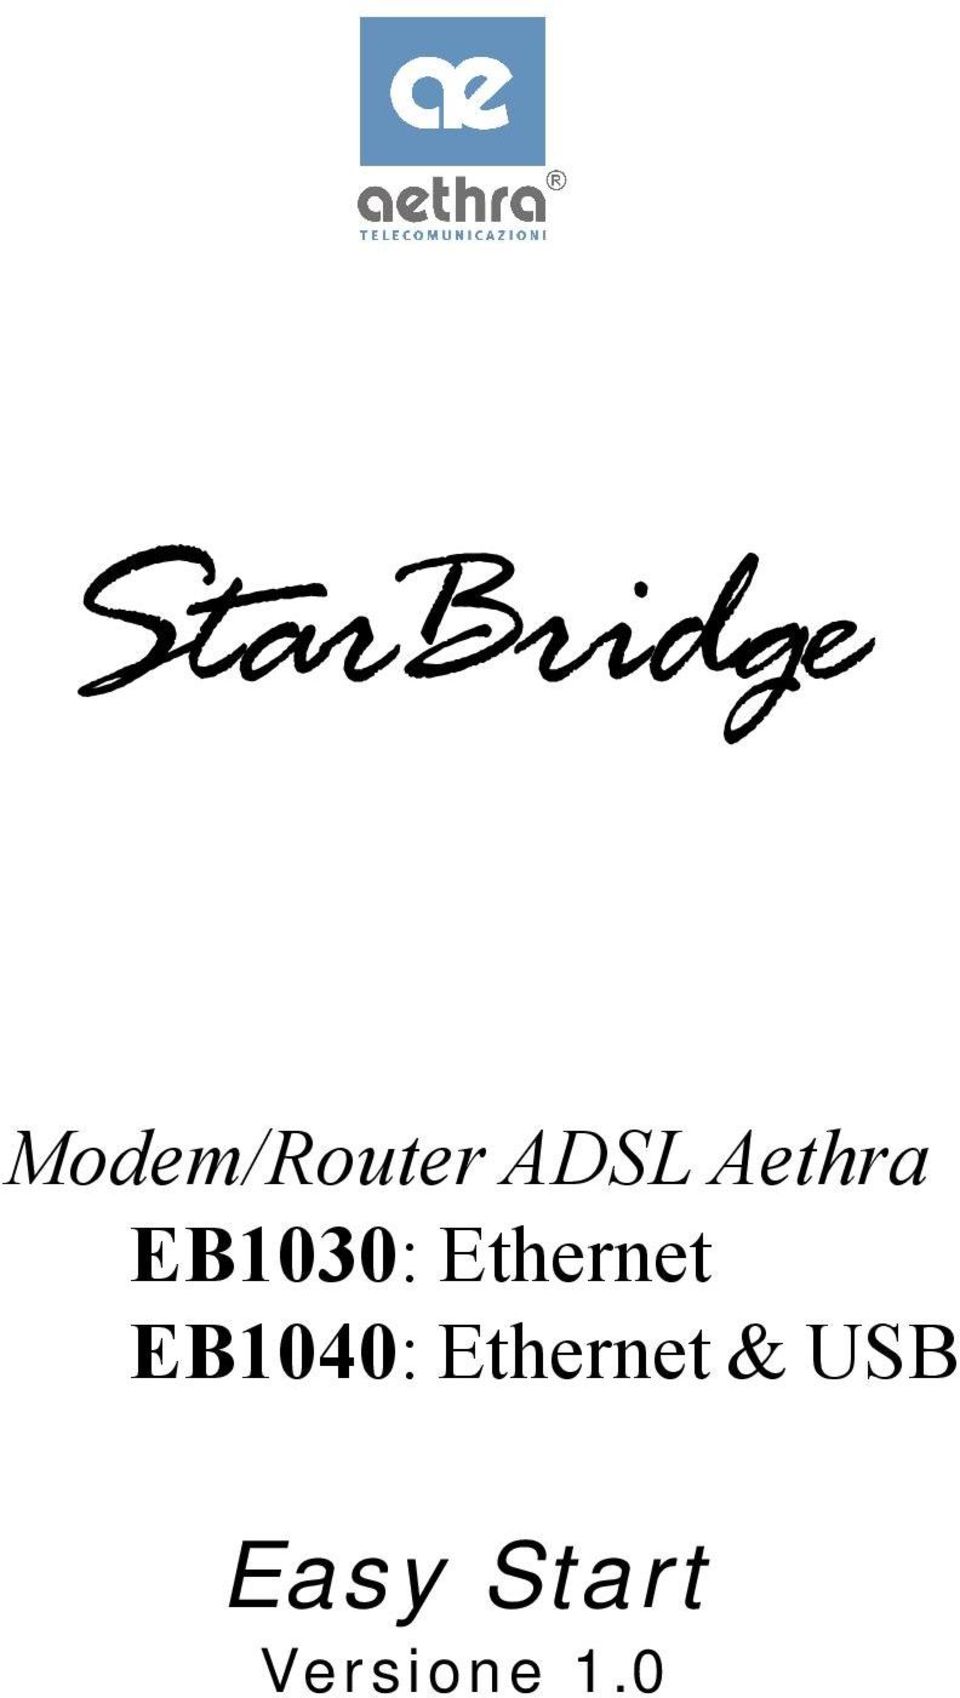 Ethernet EB1040: Ethernet